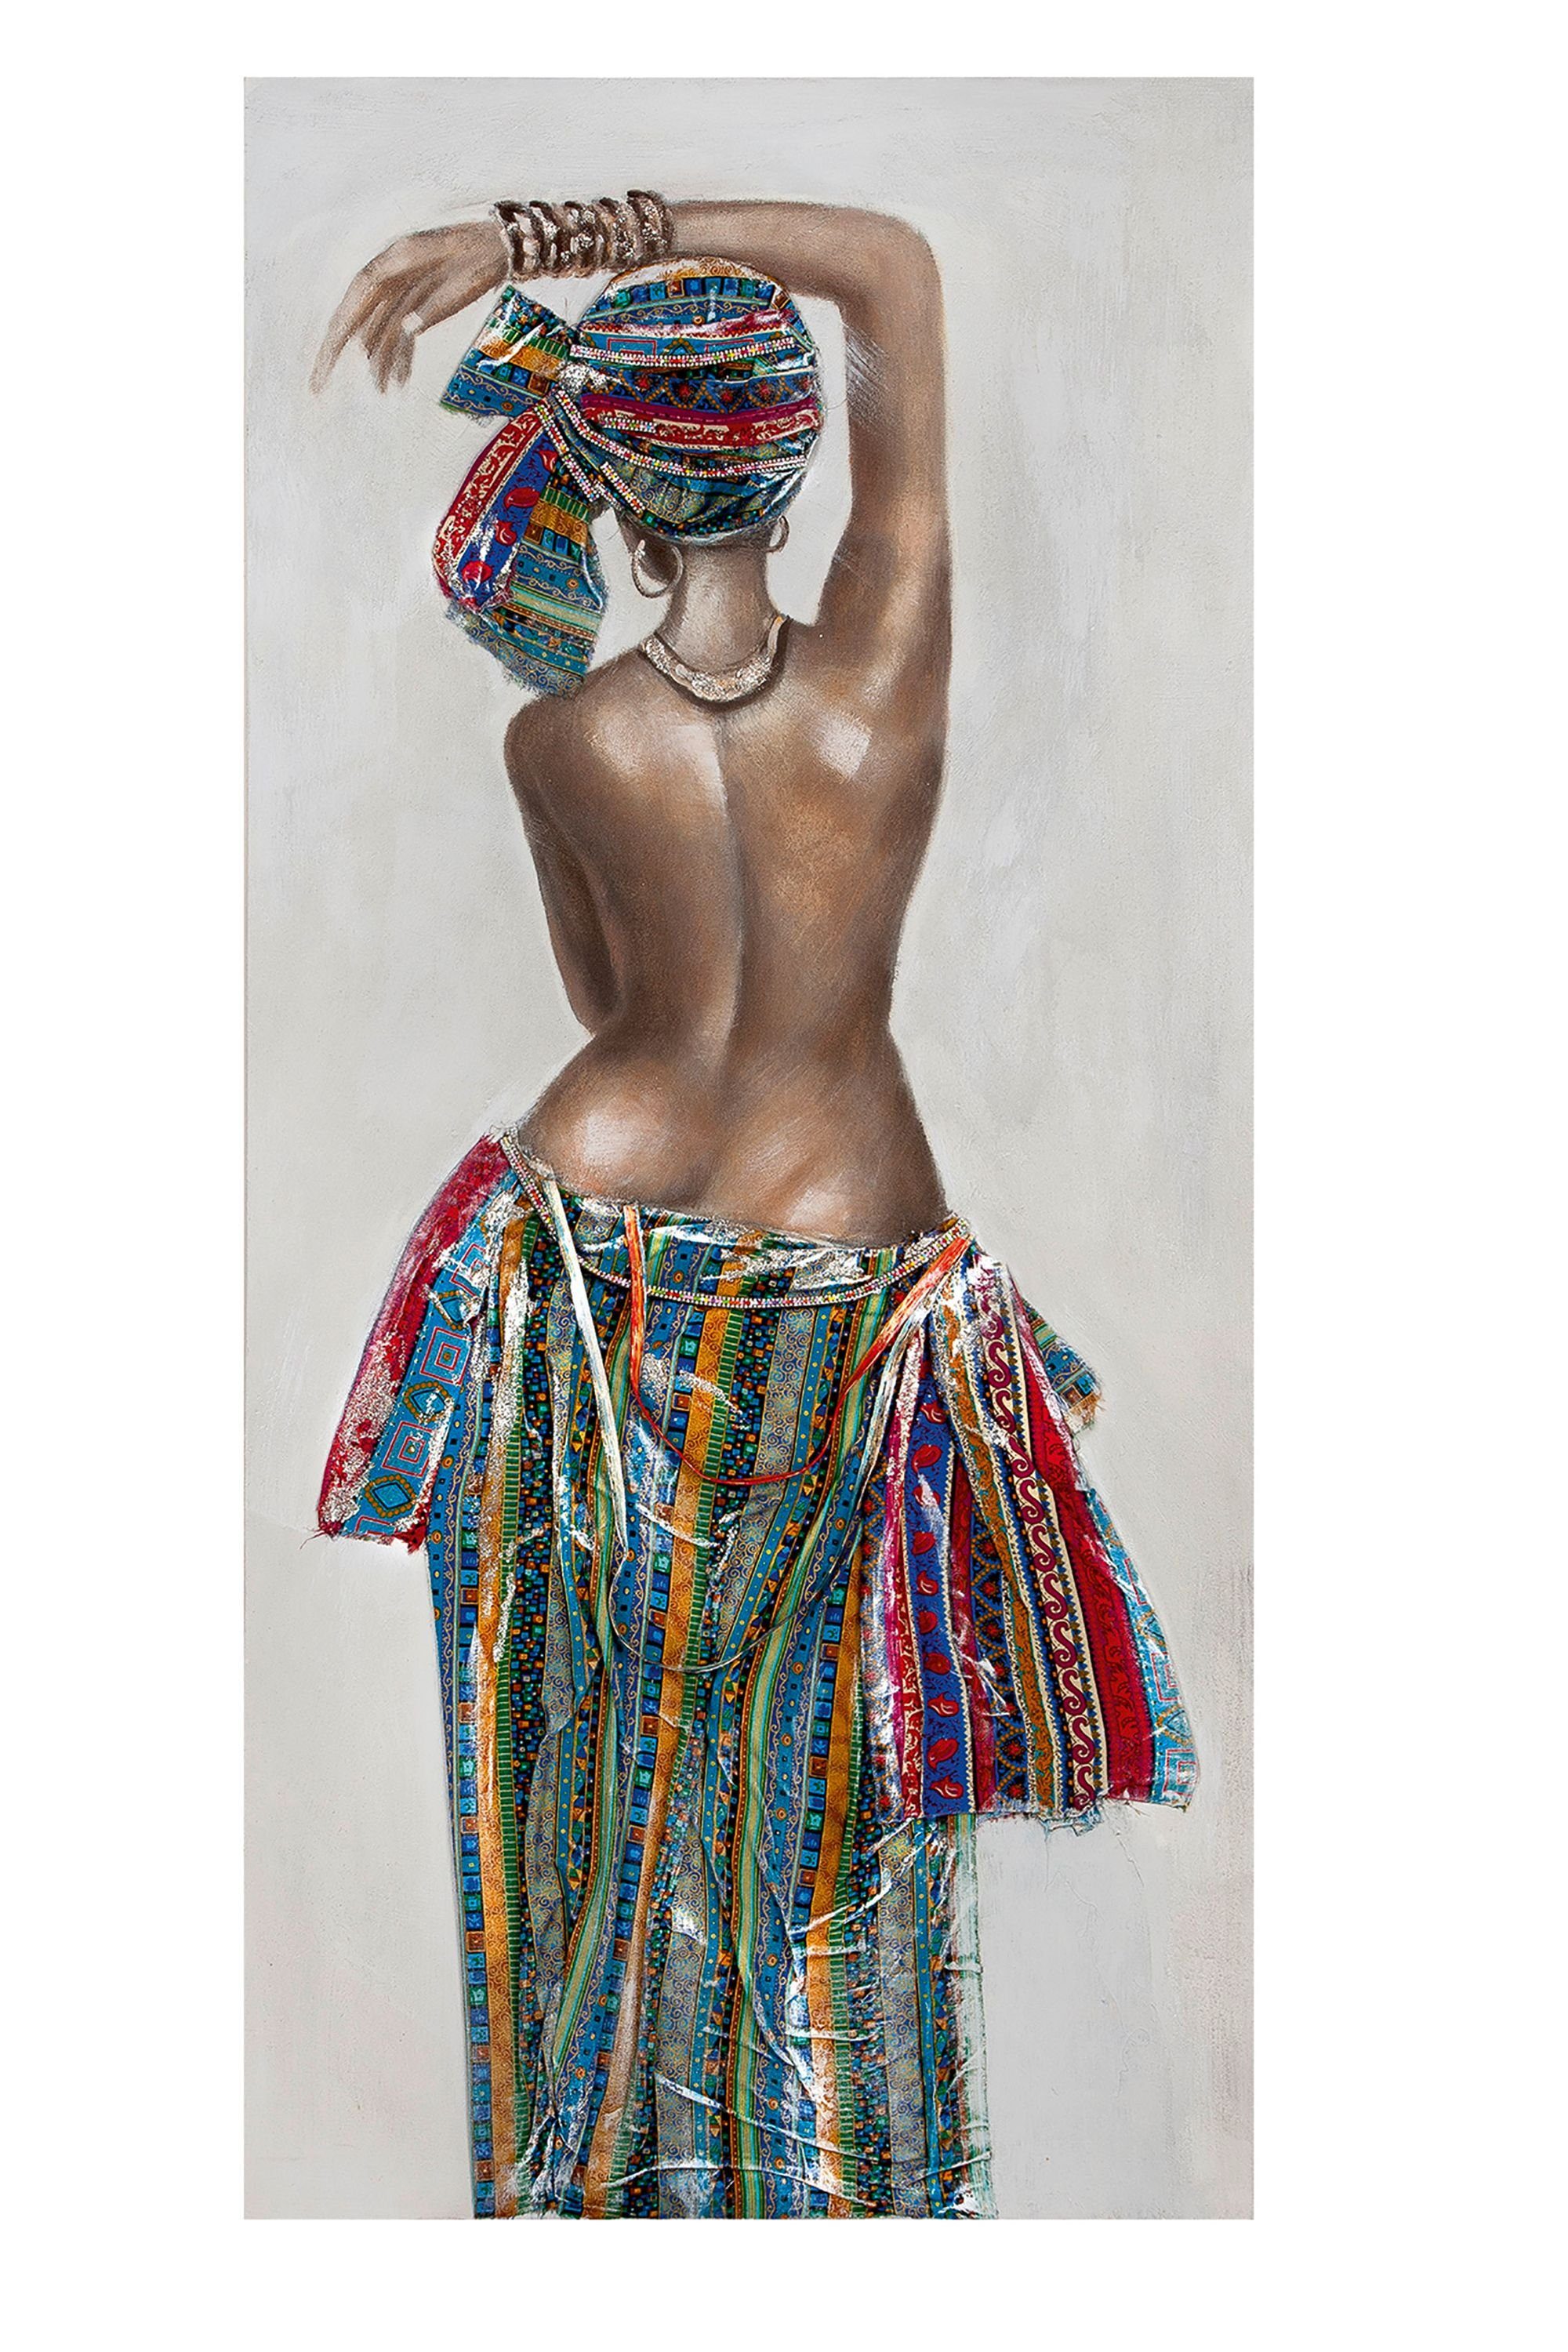 GILDE Bild GILDE Bild Afrikanische Schönheit - mehrfarbig - H. 149cm x B. 70cm